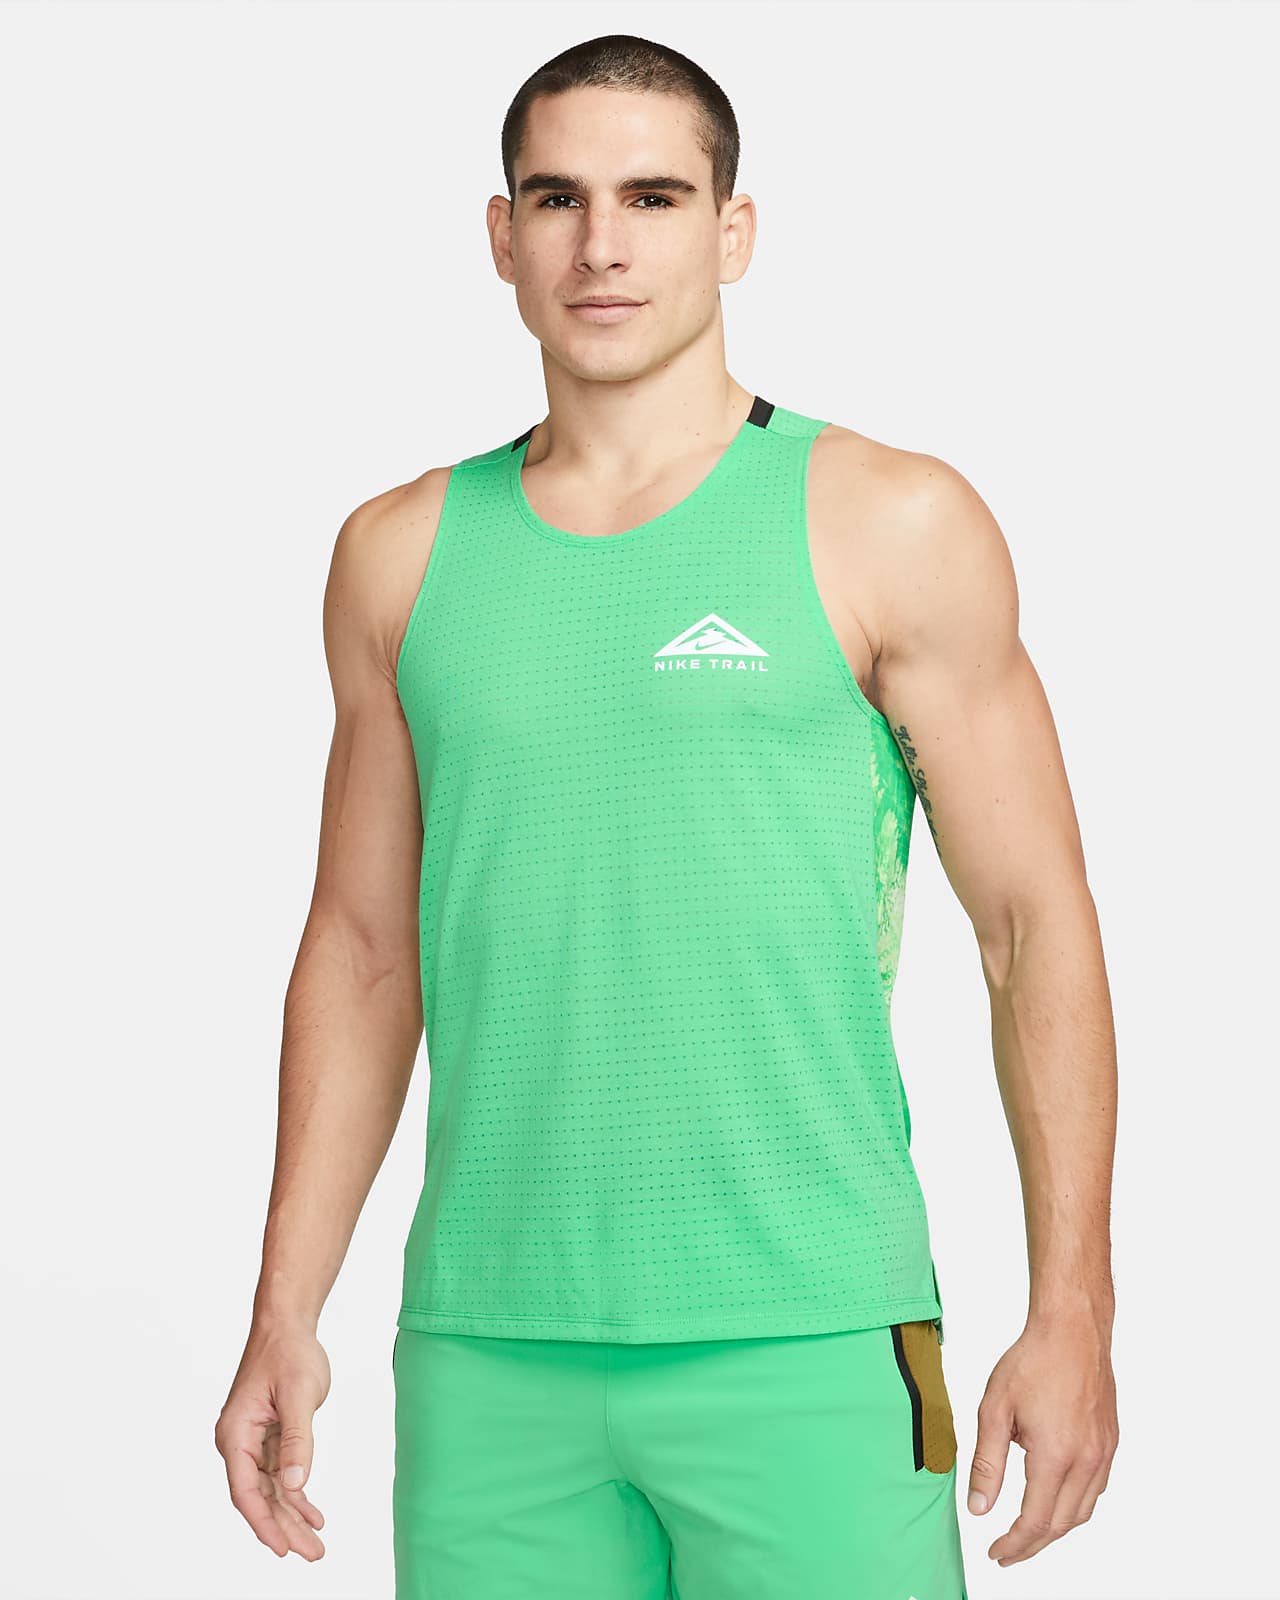 Nike Running - Trail - Débardeur à logo - Noir